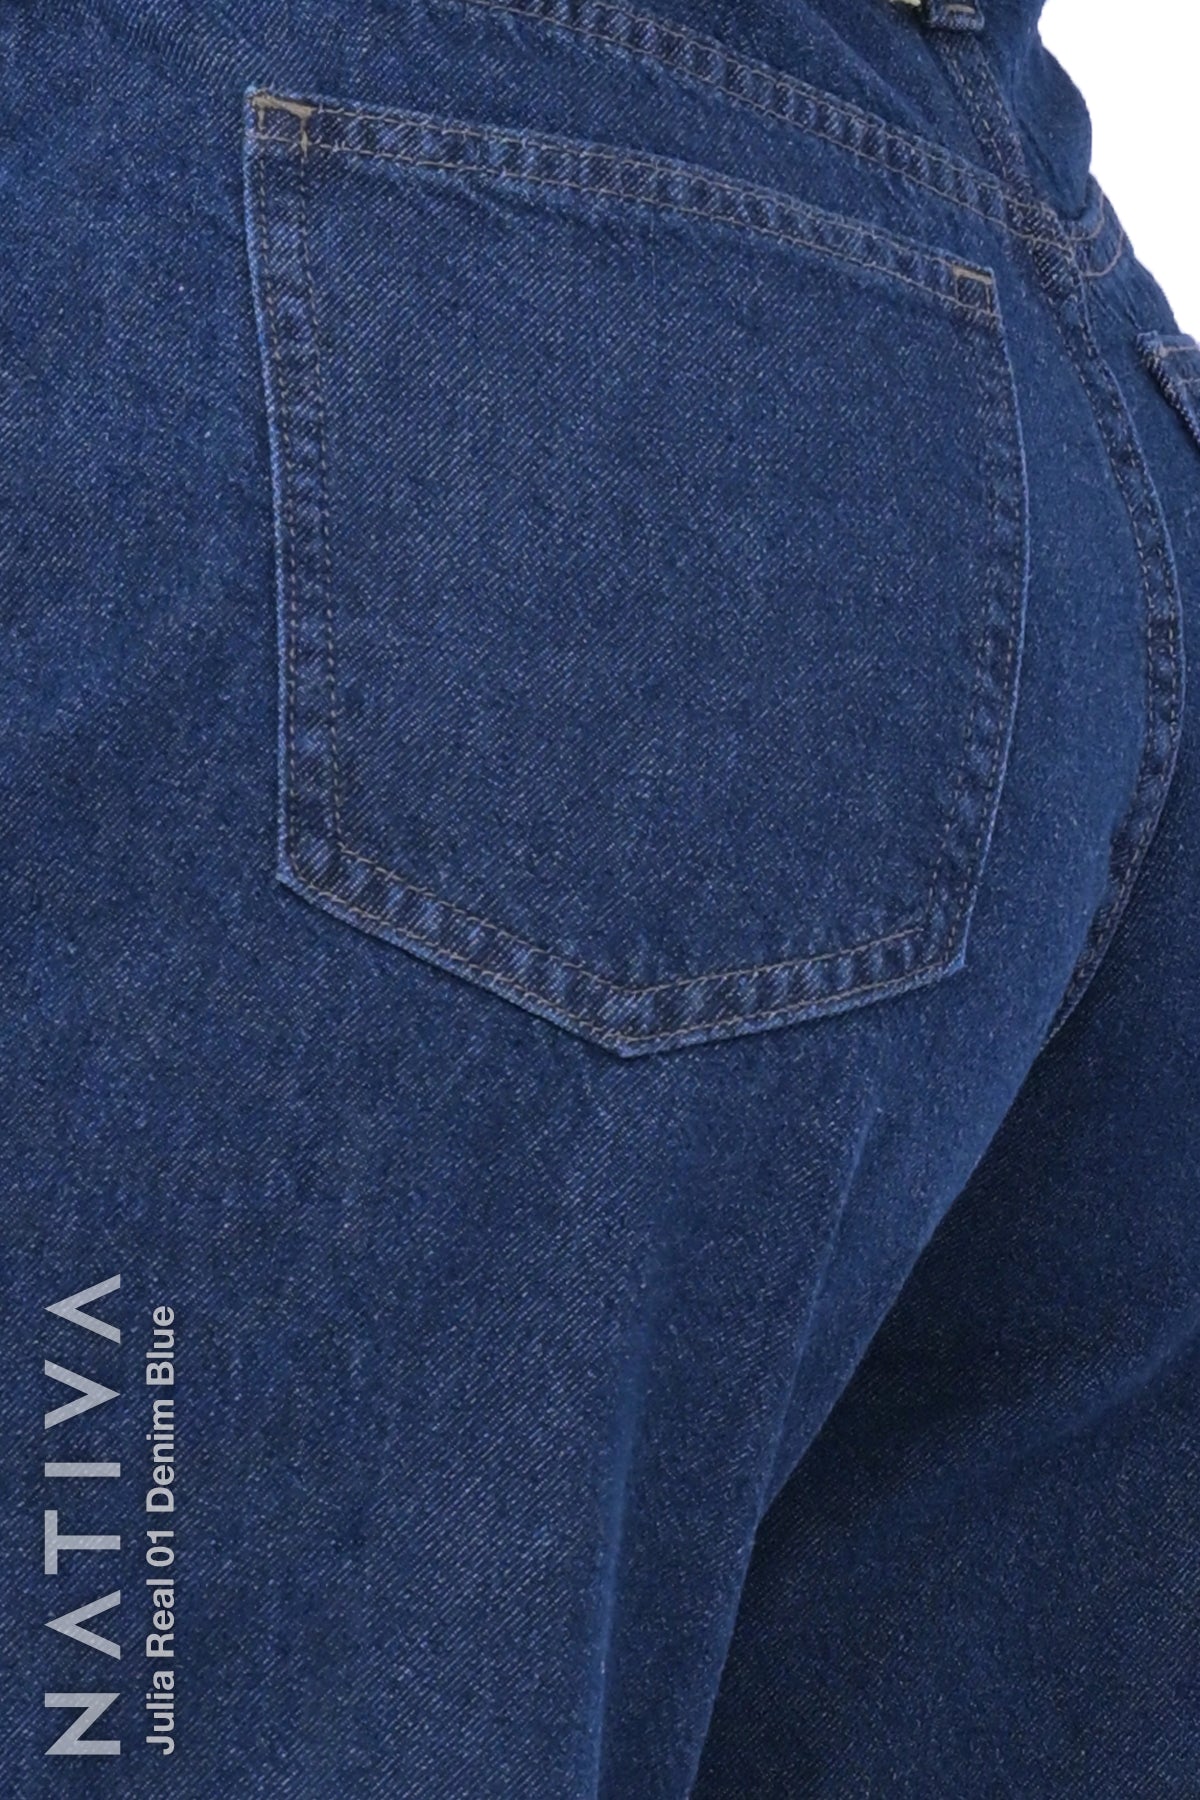 WIDE LEG True Denim Jeans, JULIA REAL 01 DENIM BLUE. Talle Alto. Auténtico e Interminable. Cintura Ajustable PERFECT FIT®